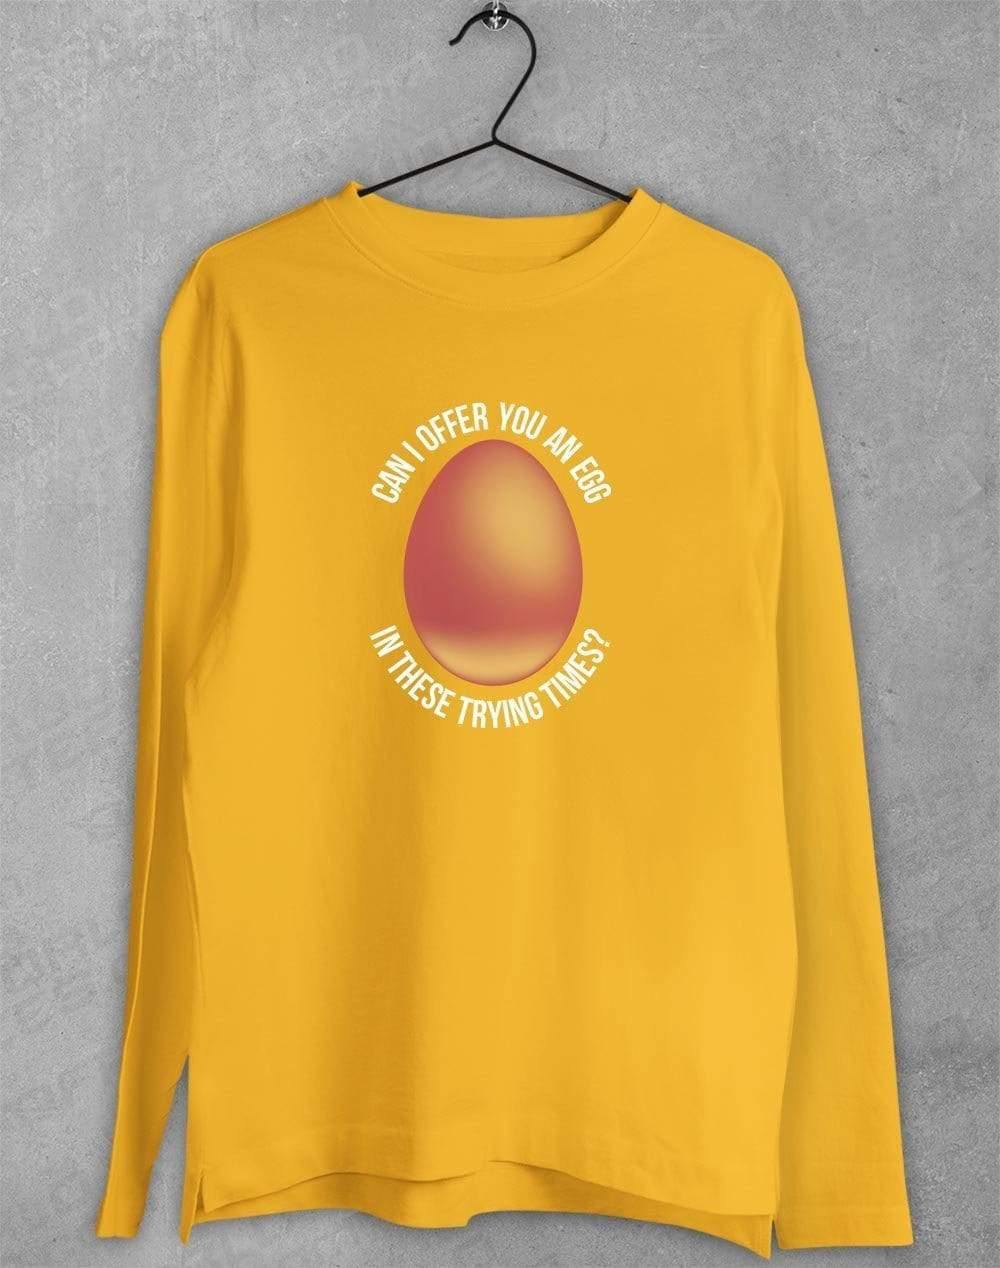 Egg Offer Long Sleeve T-Shirt S / Gold  - Off World Tees